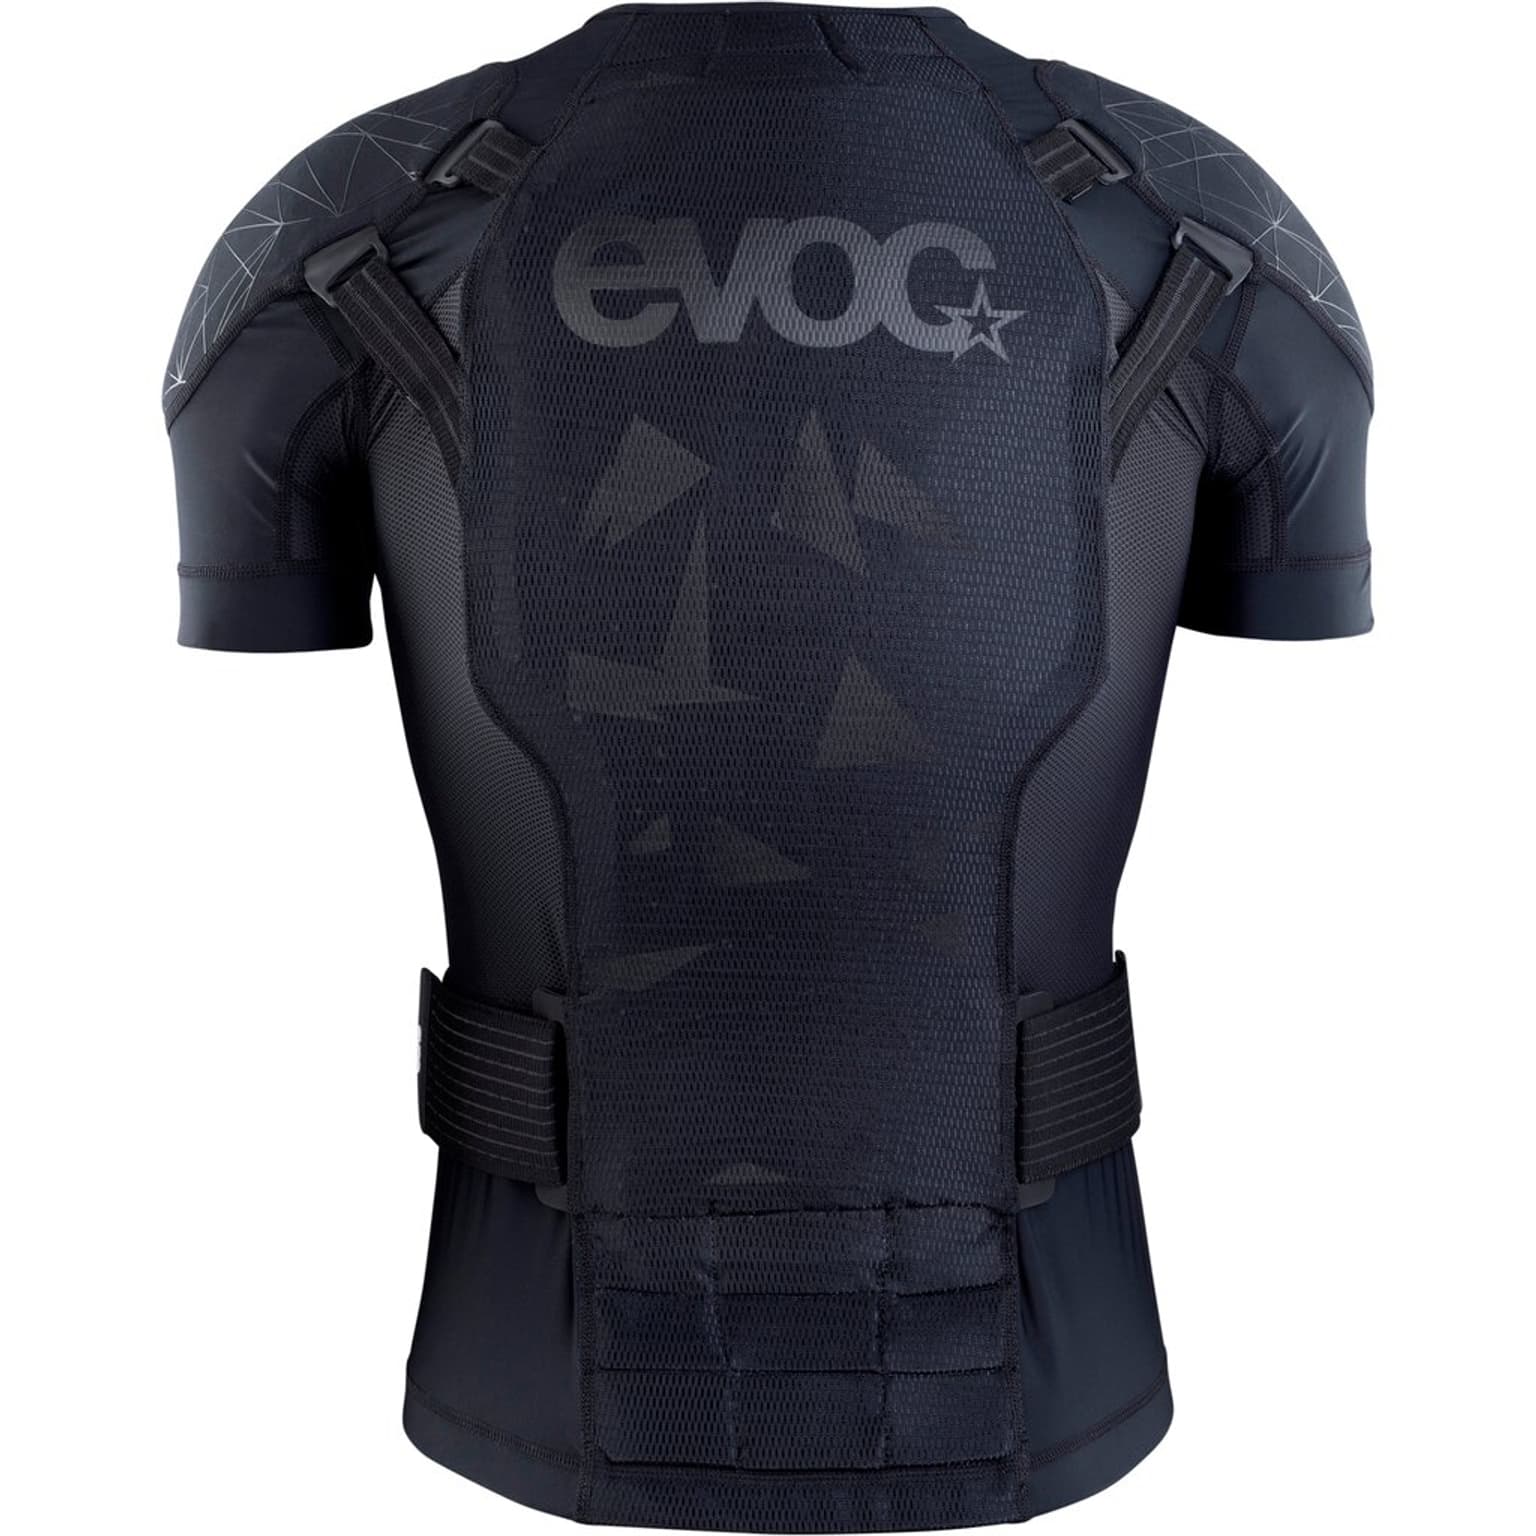 Evoc Evoc Protector Jacket Pro Protections noir 2